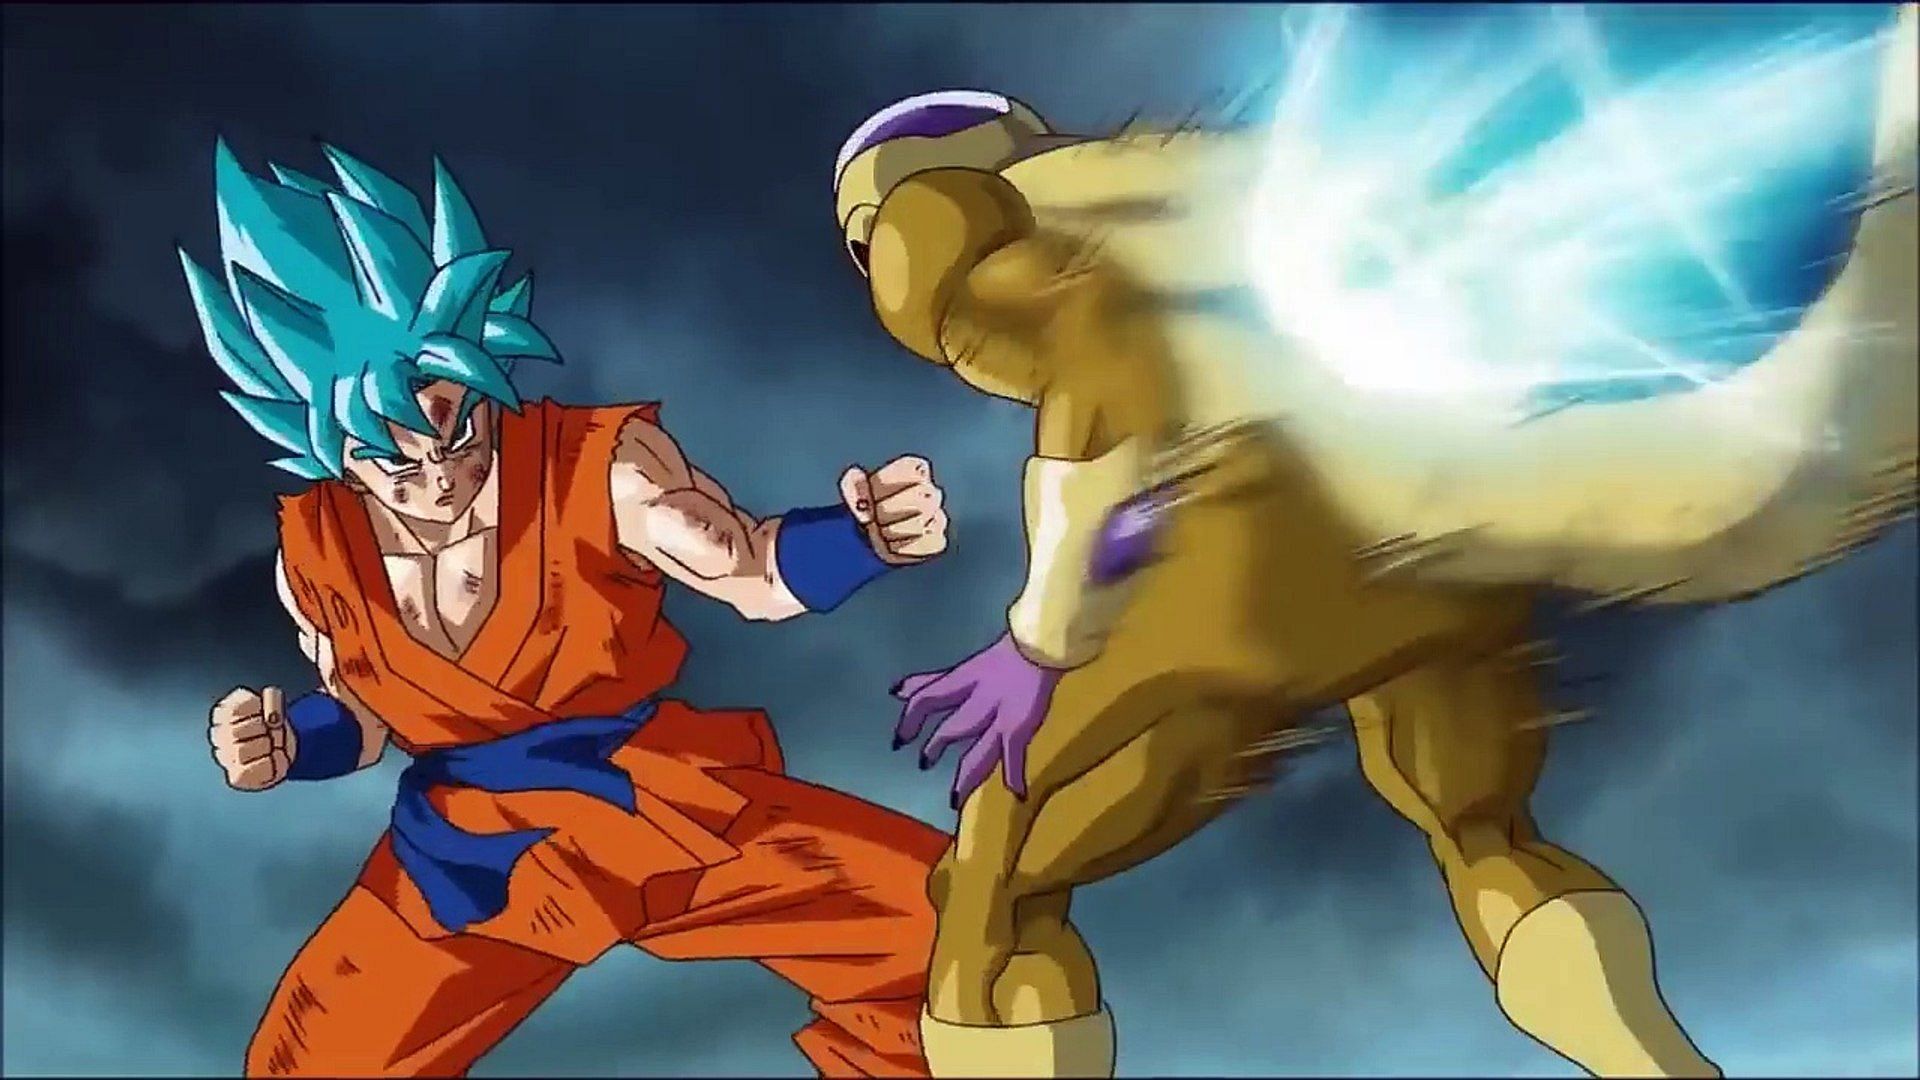 SSB Goku One Inch Punch Against Golden Frieza(Image via Toei Animation)